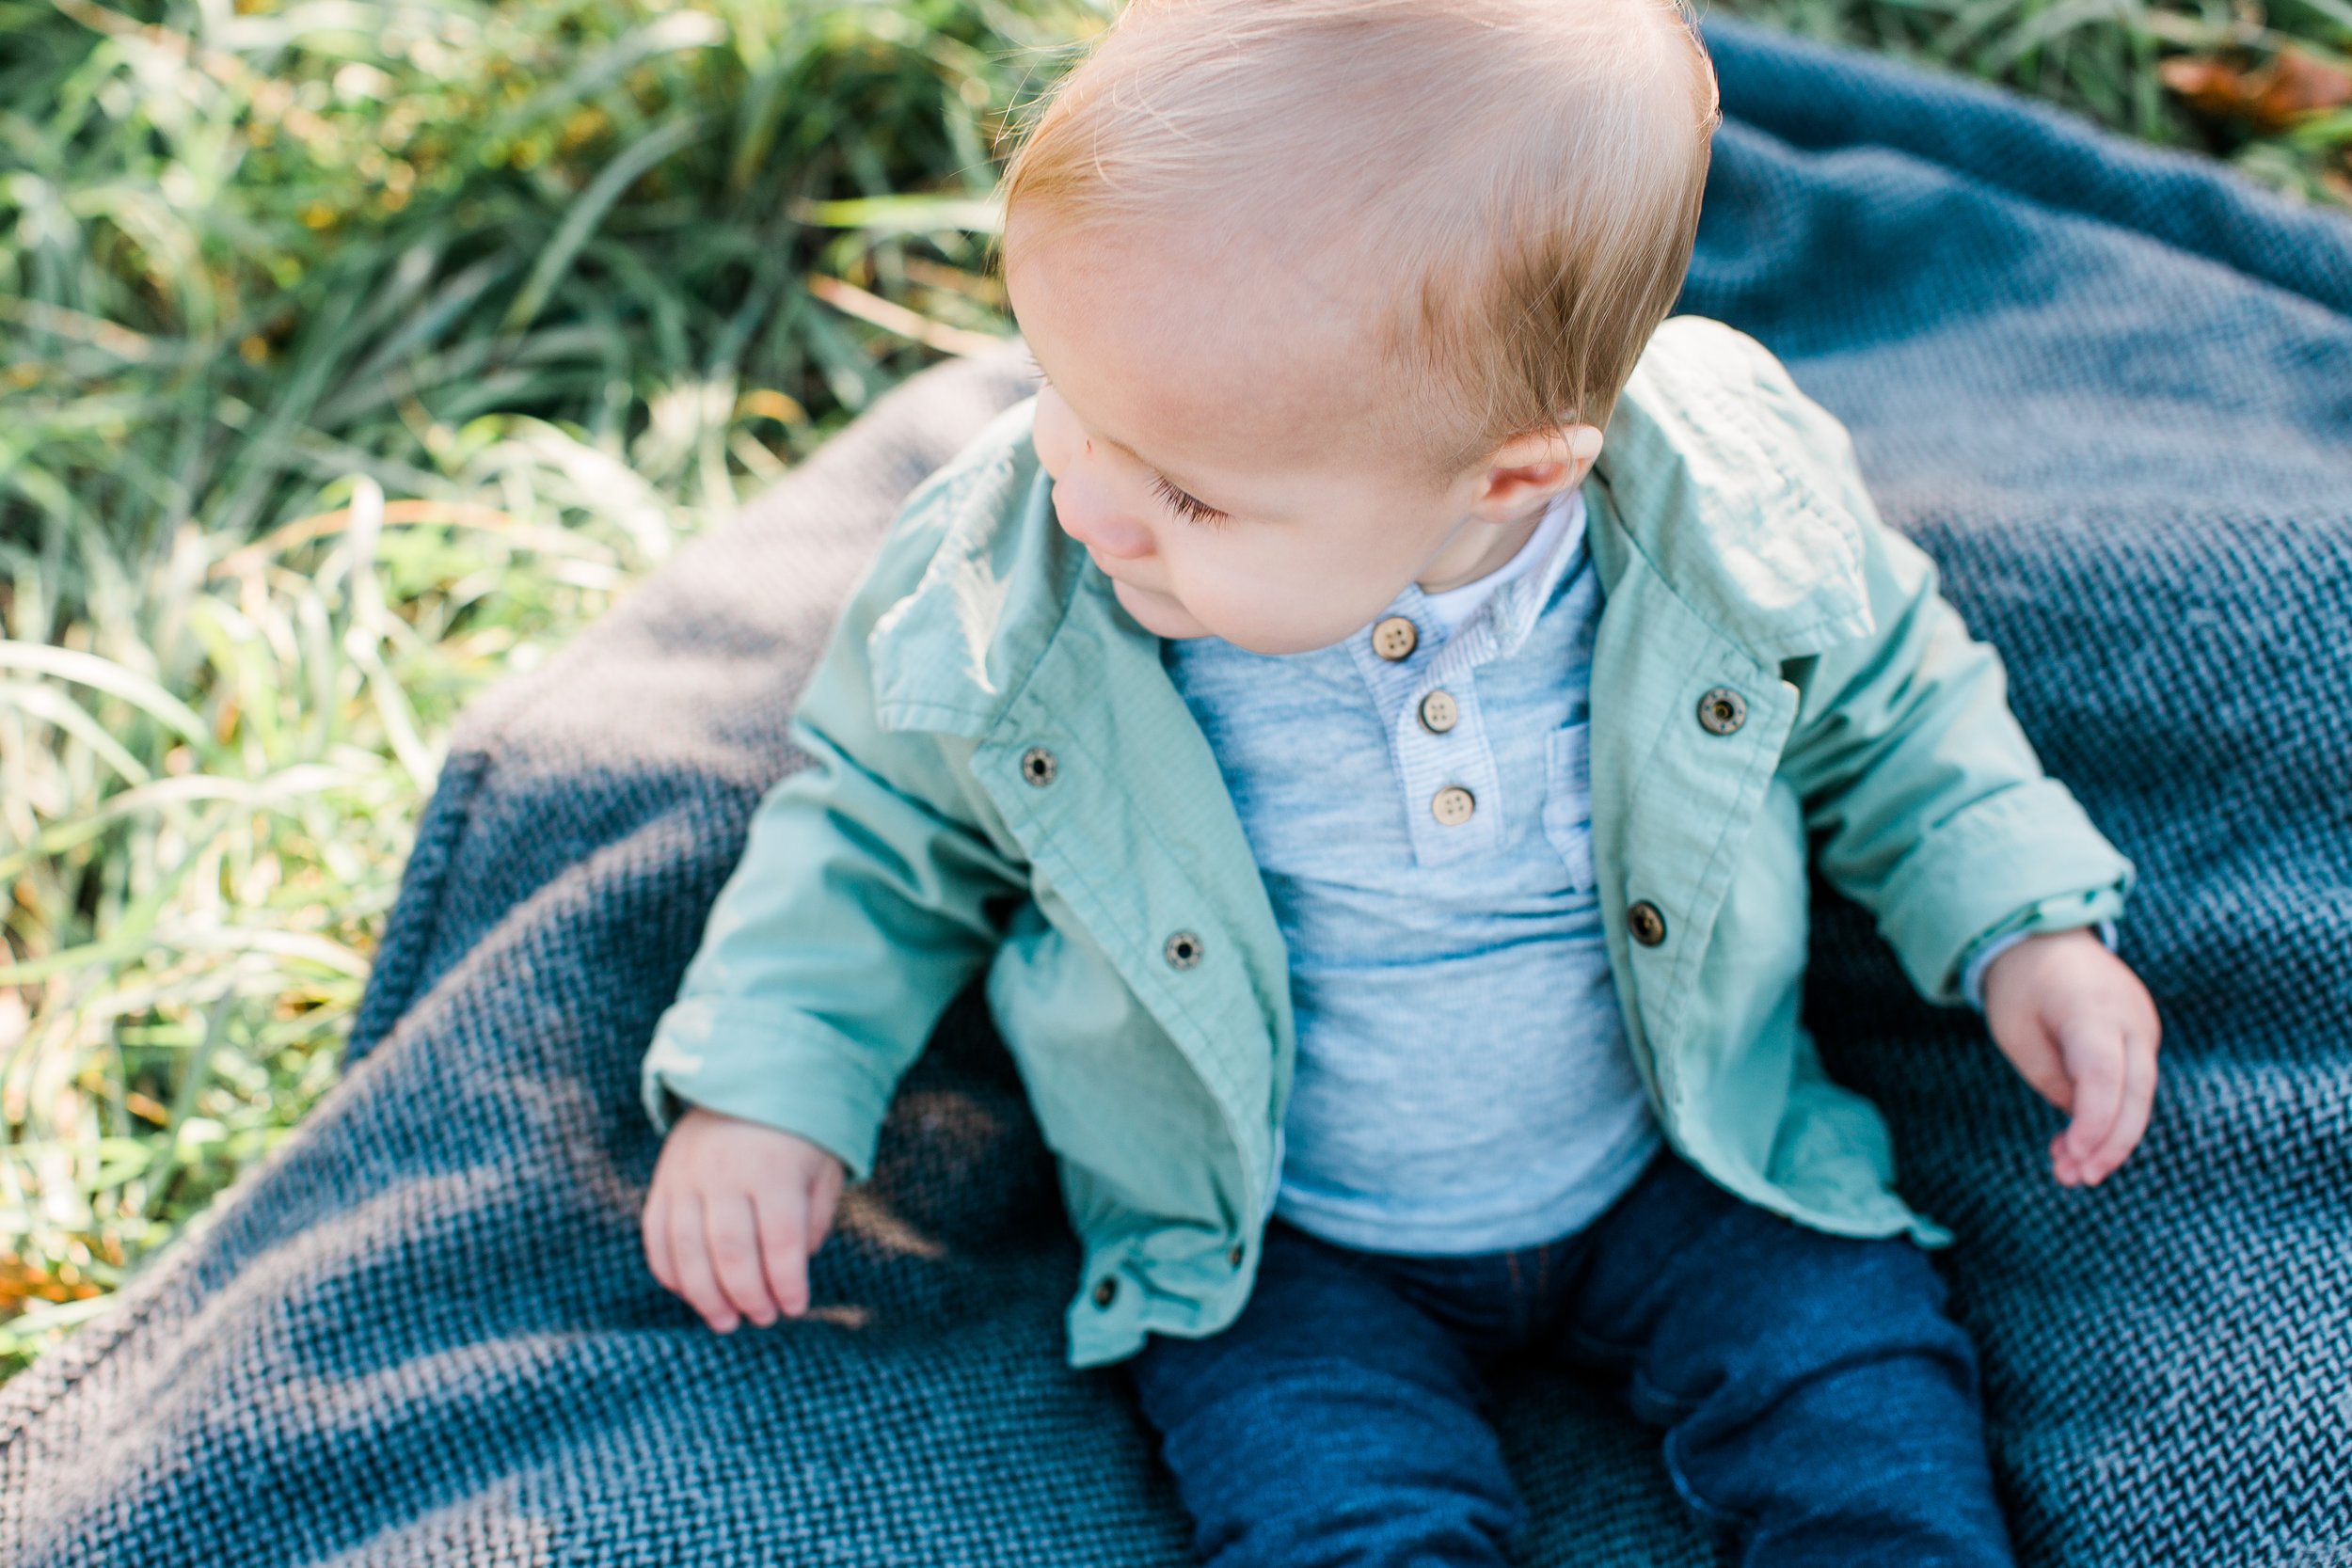 Blone baby boy portrait with green jacket jeans and long eyelashes Minnesota family photographer Mallory Kiesow Photography